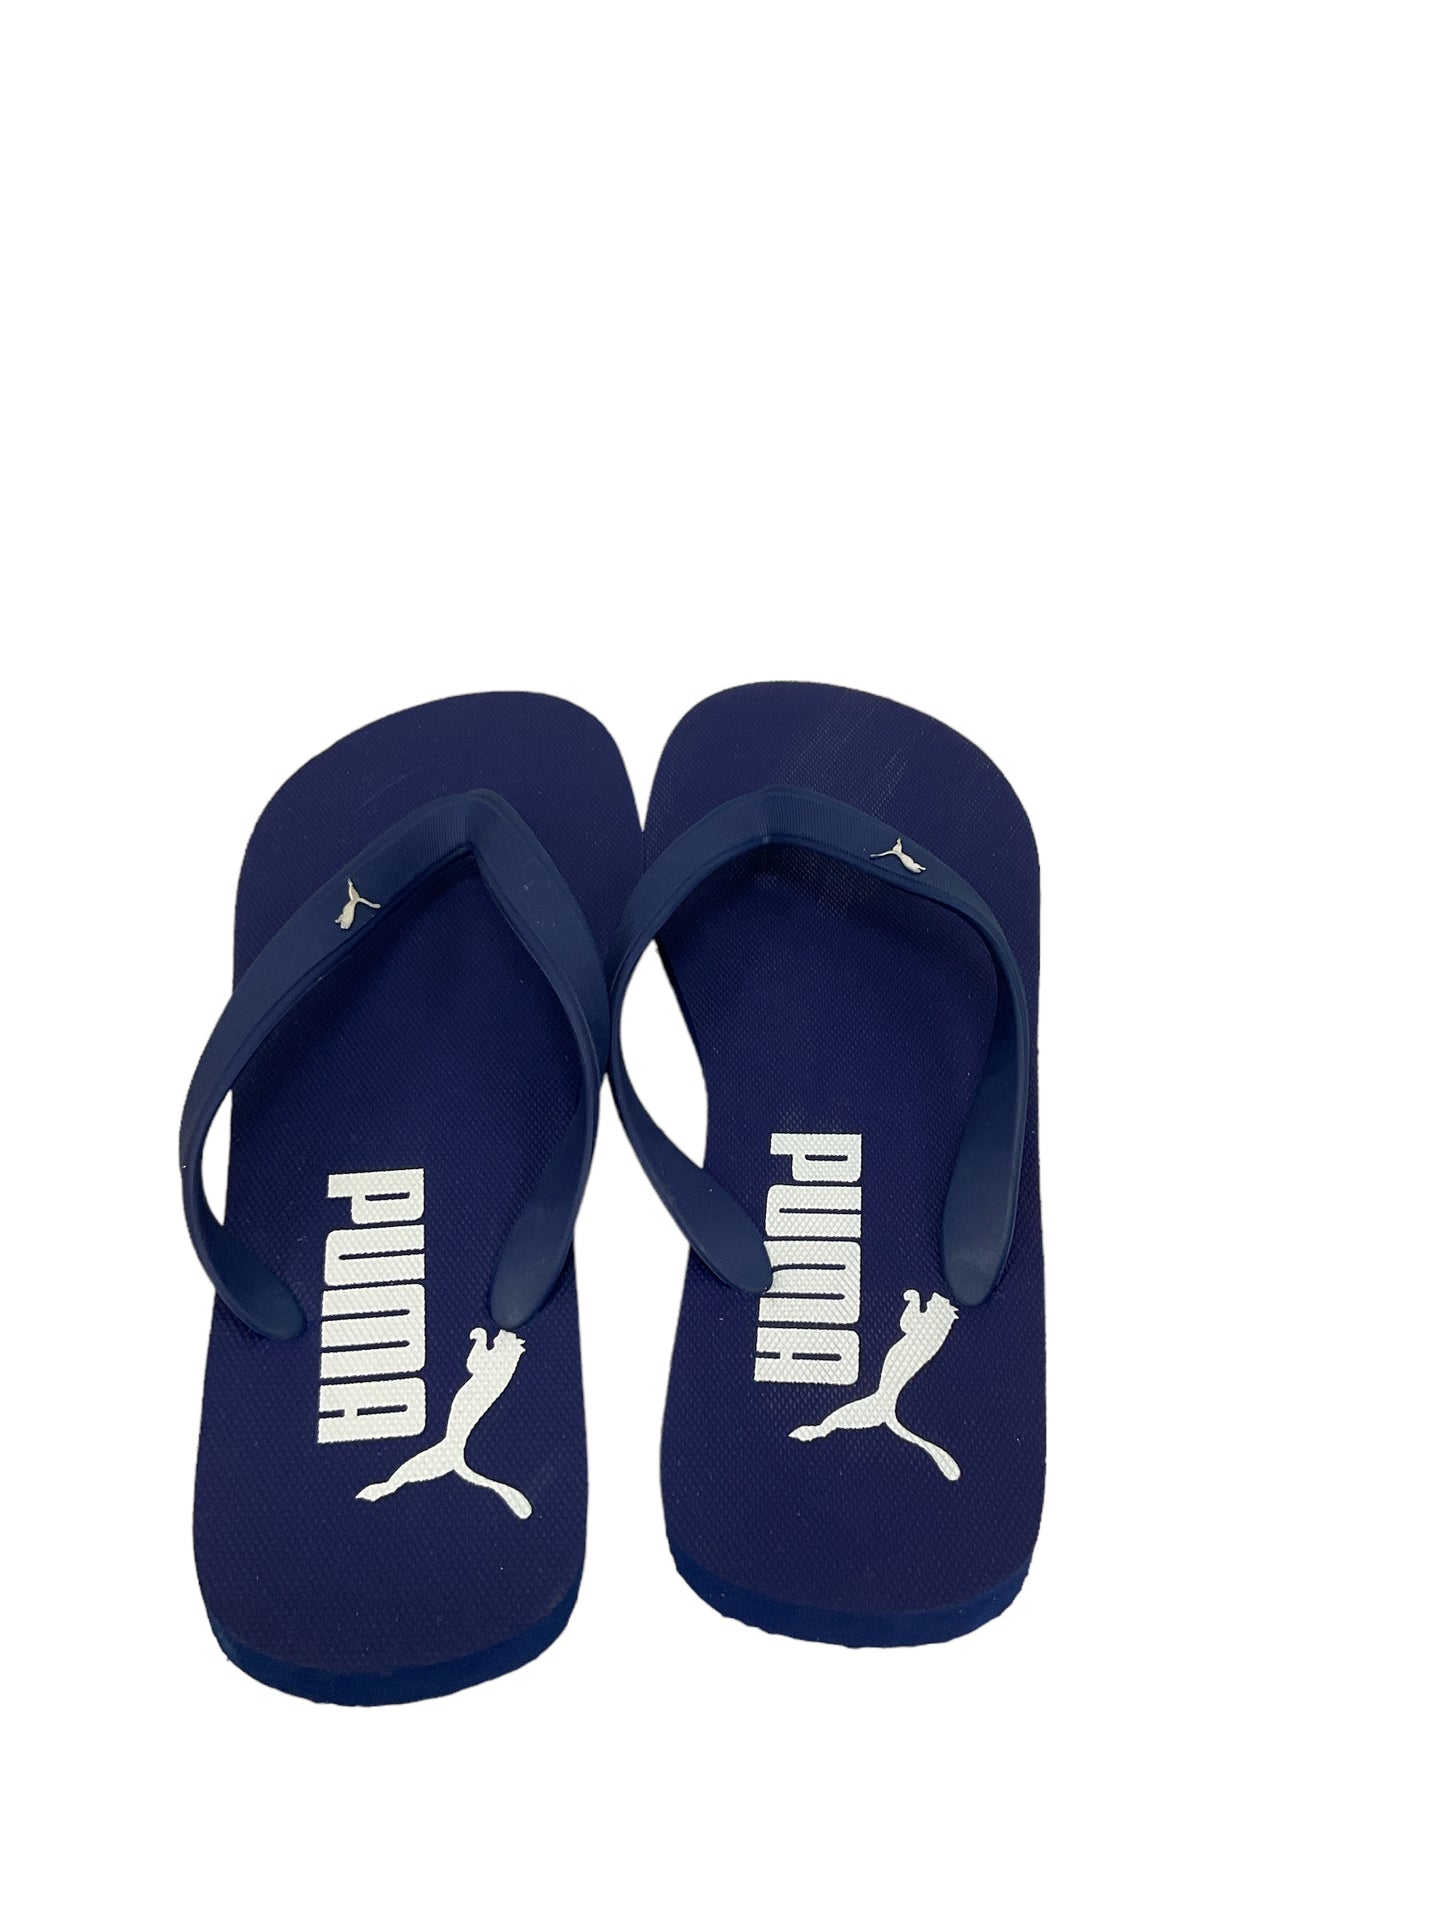 Sandals Flip Flops By Puma  Size: 8.5